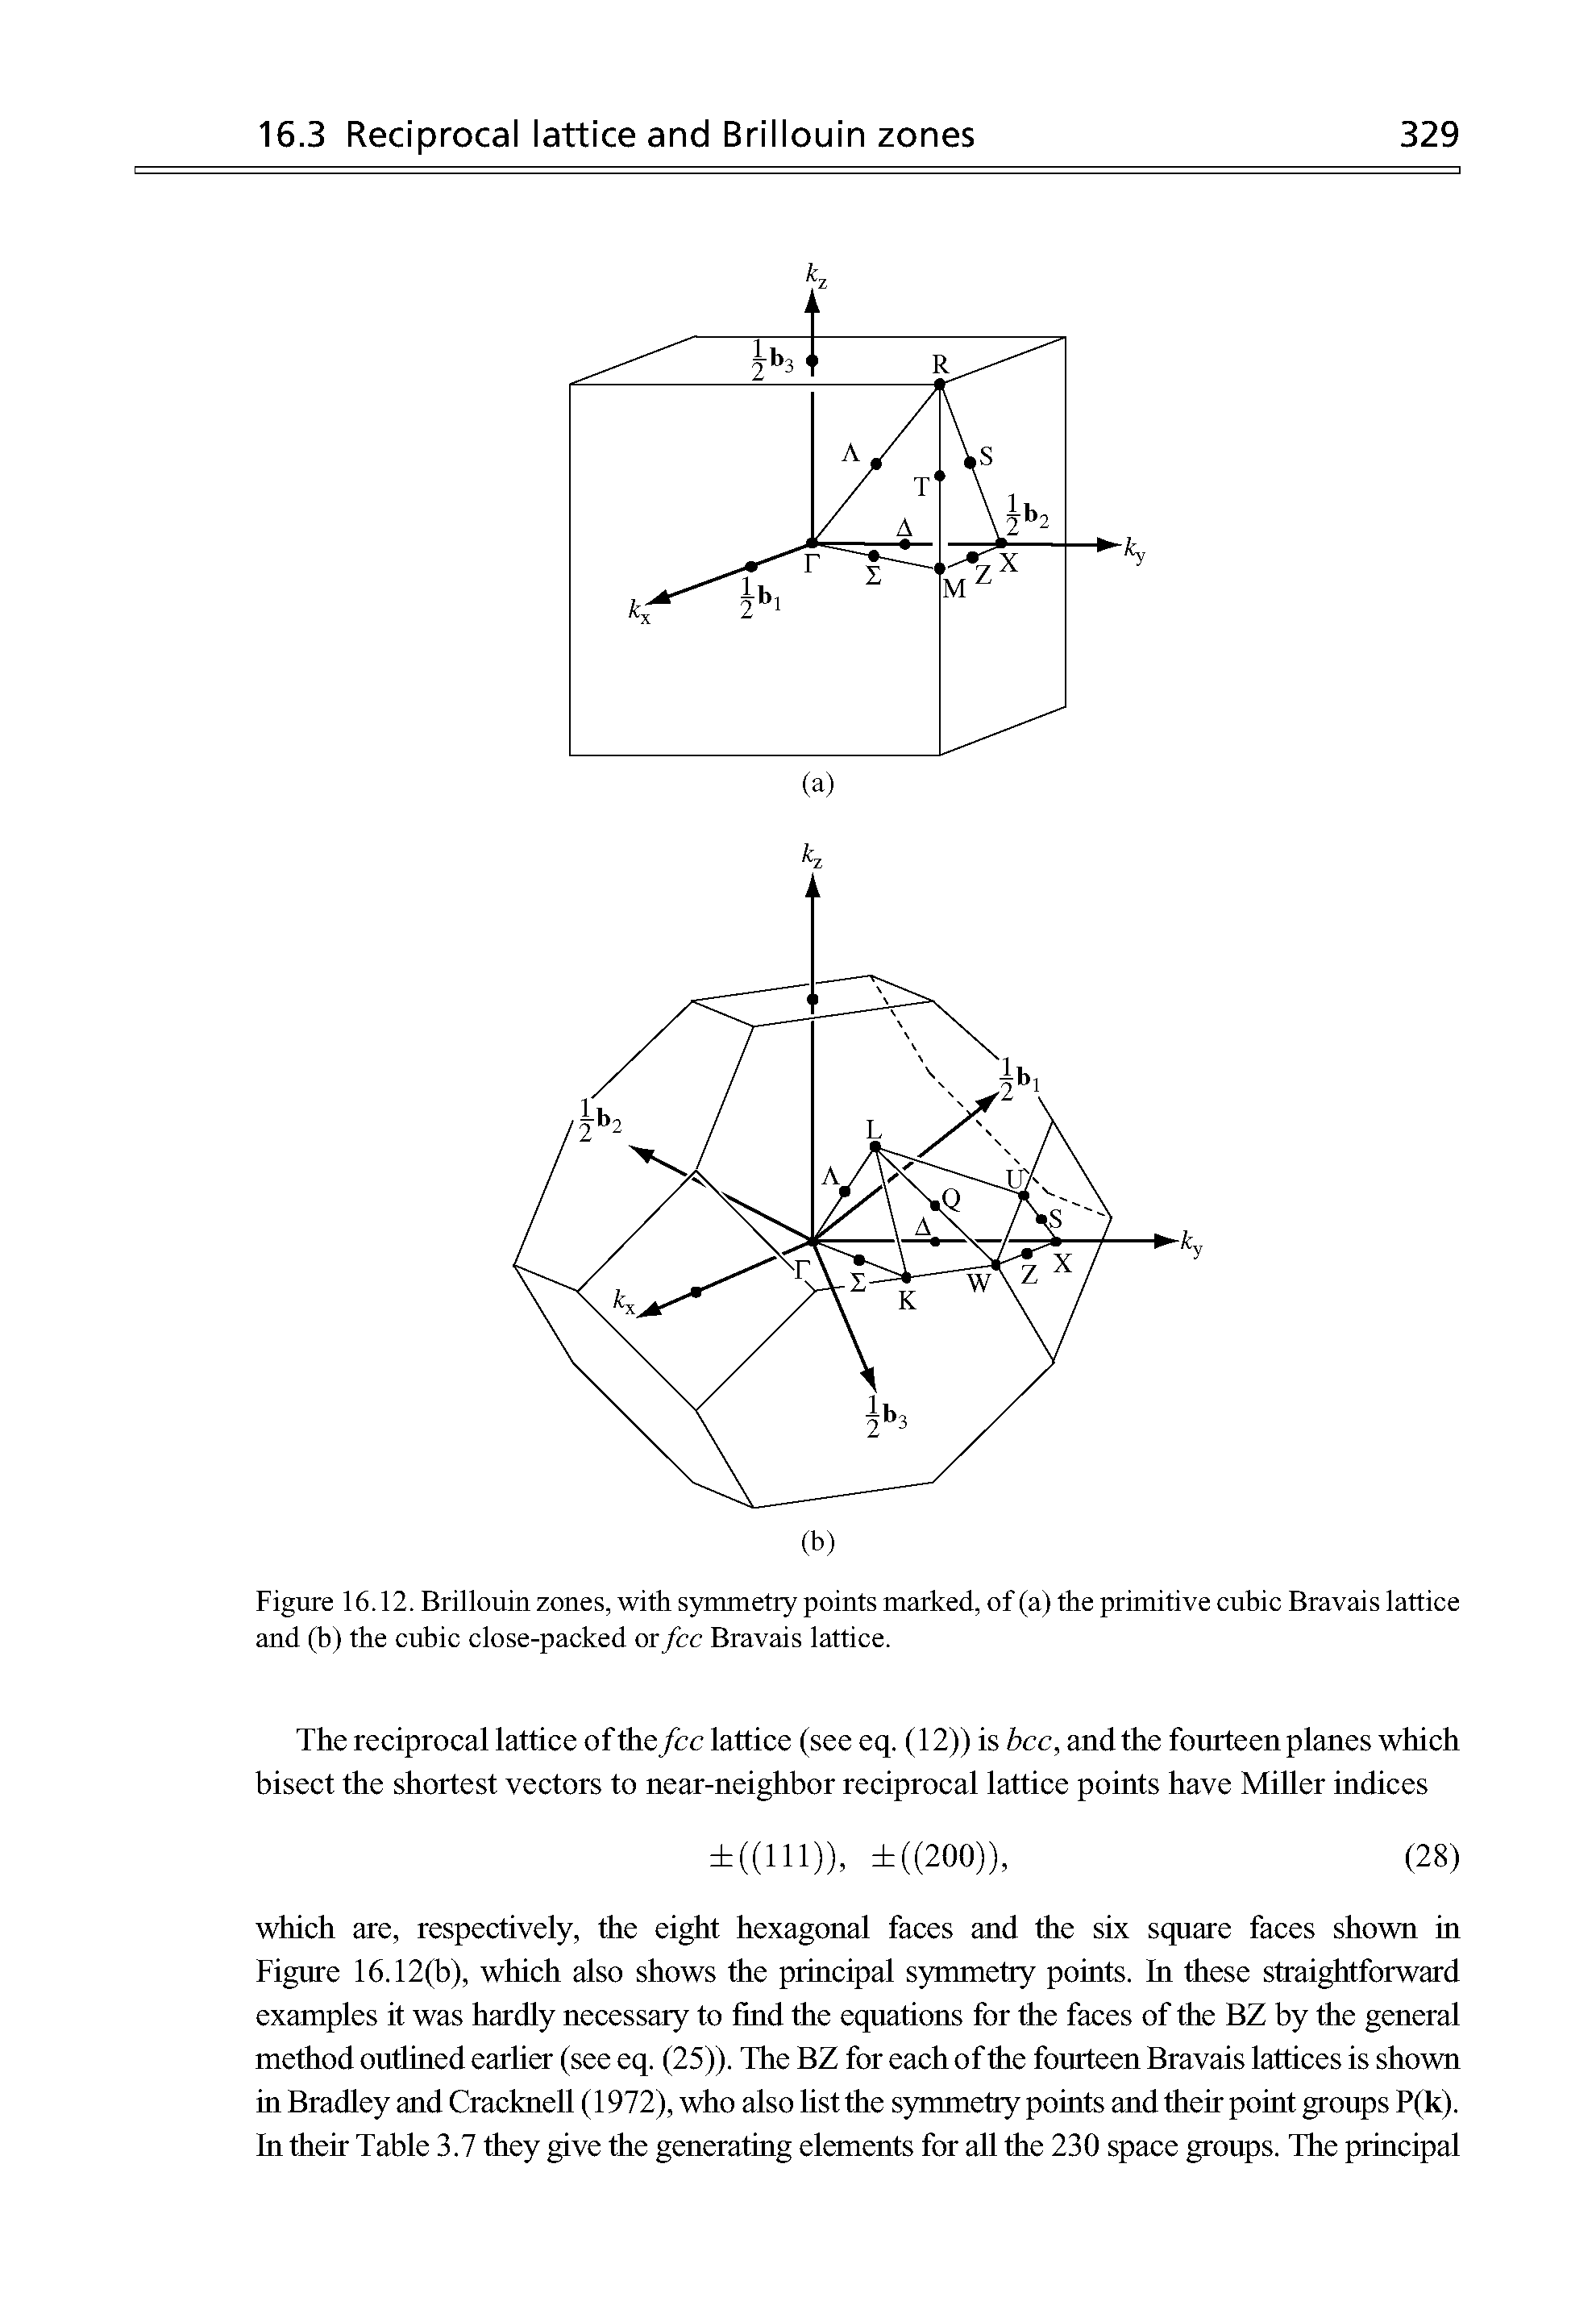 Figure 16.12. Brillouin zones, with symmetry points marked, of (a) the primitive cubic Bravais lattice and (b) the cubic close-packed or fee Bravais lattice.